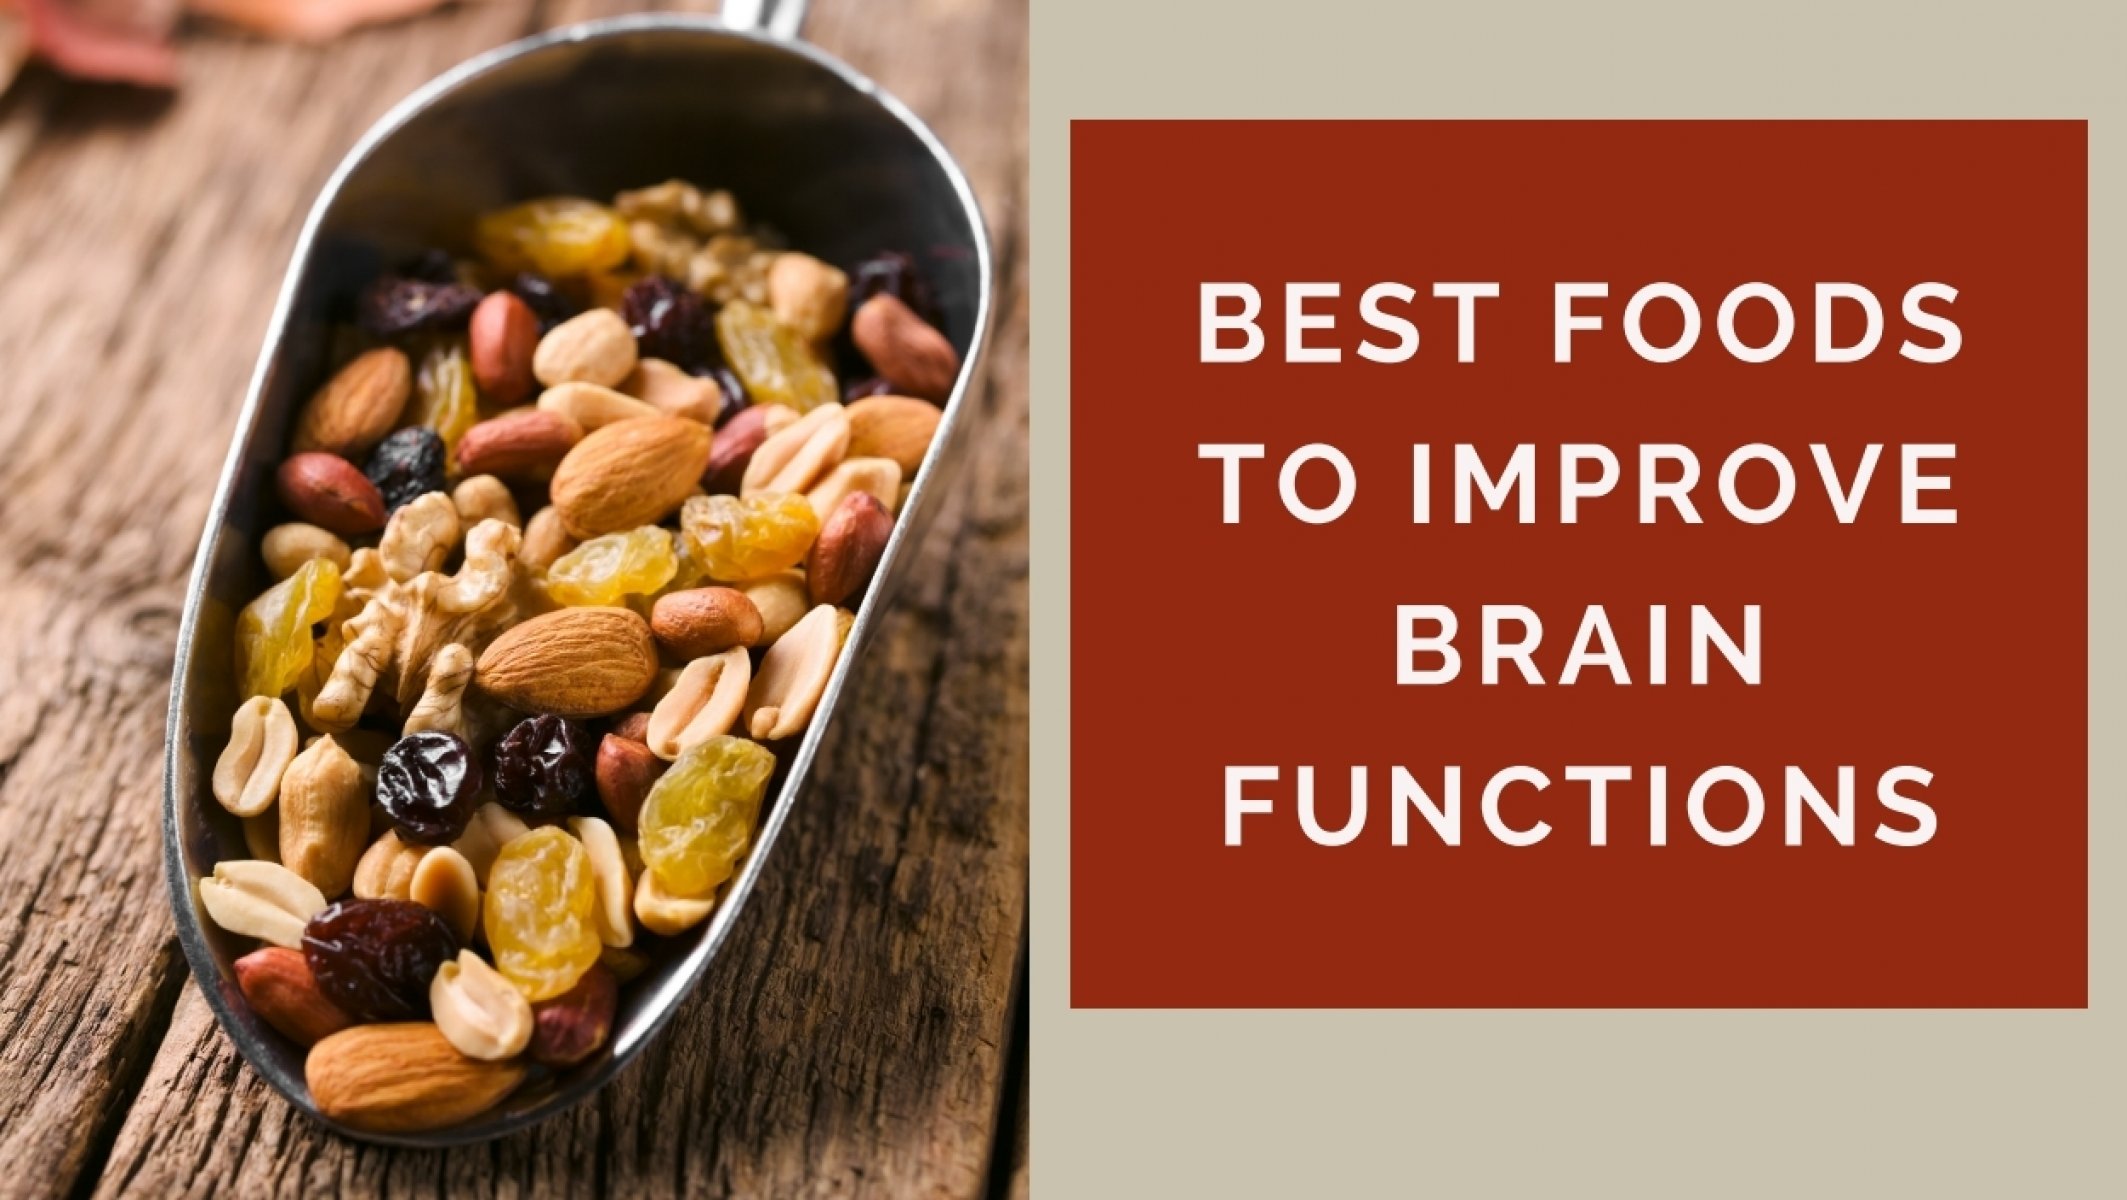 Best Foods to Improve Brain Functions